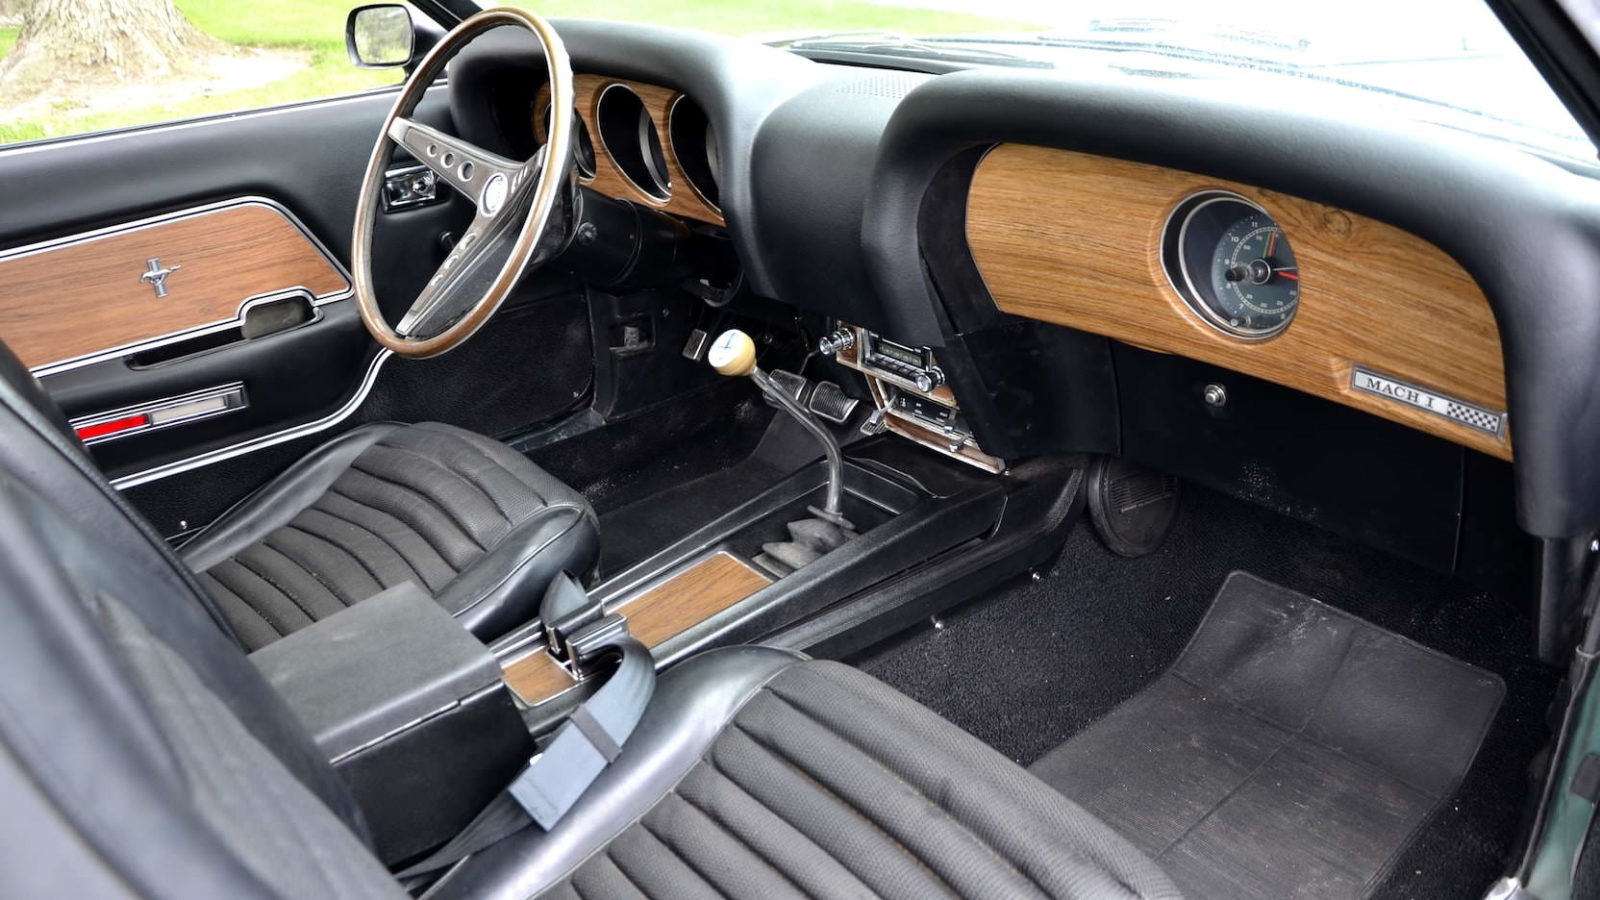 1969 Ford Mustang Mach 1 – The 428 cu. in. 335 bhp Camaro Killer